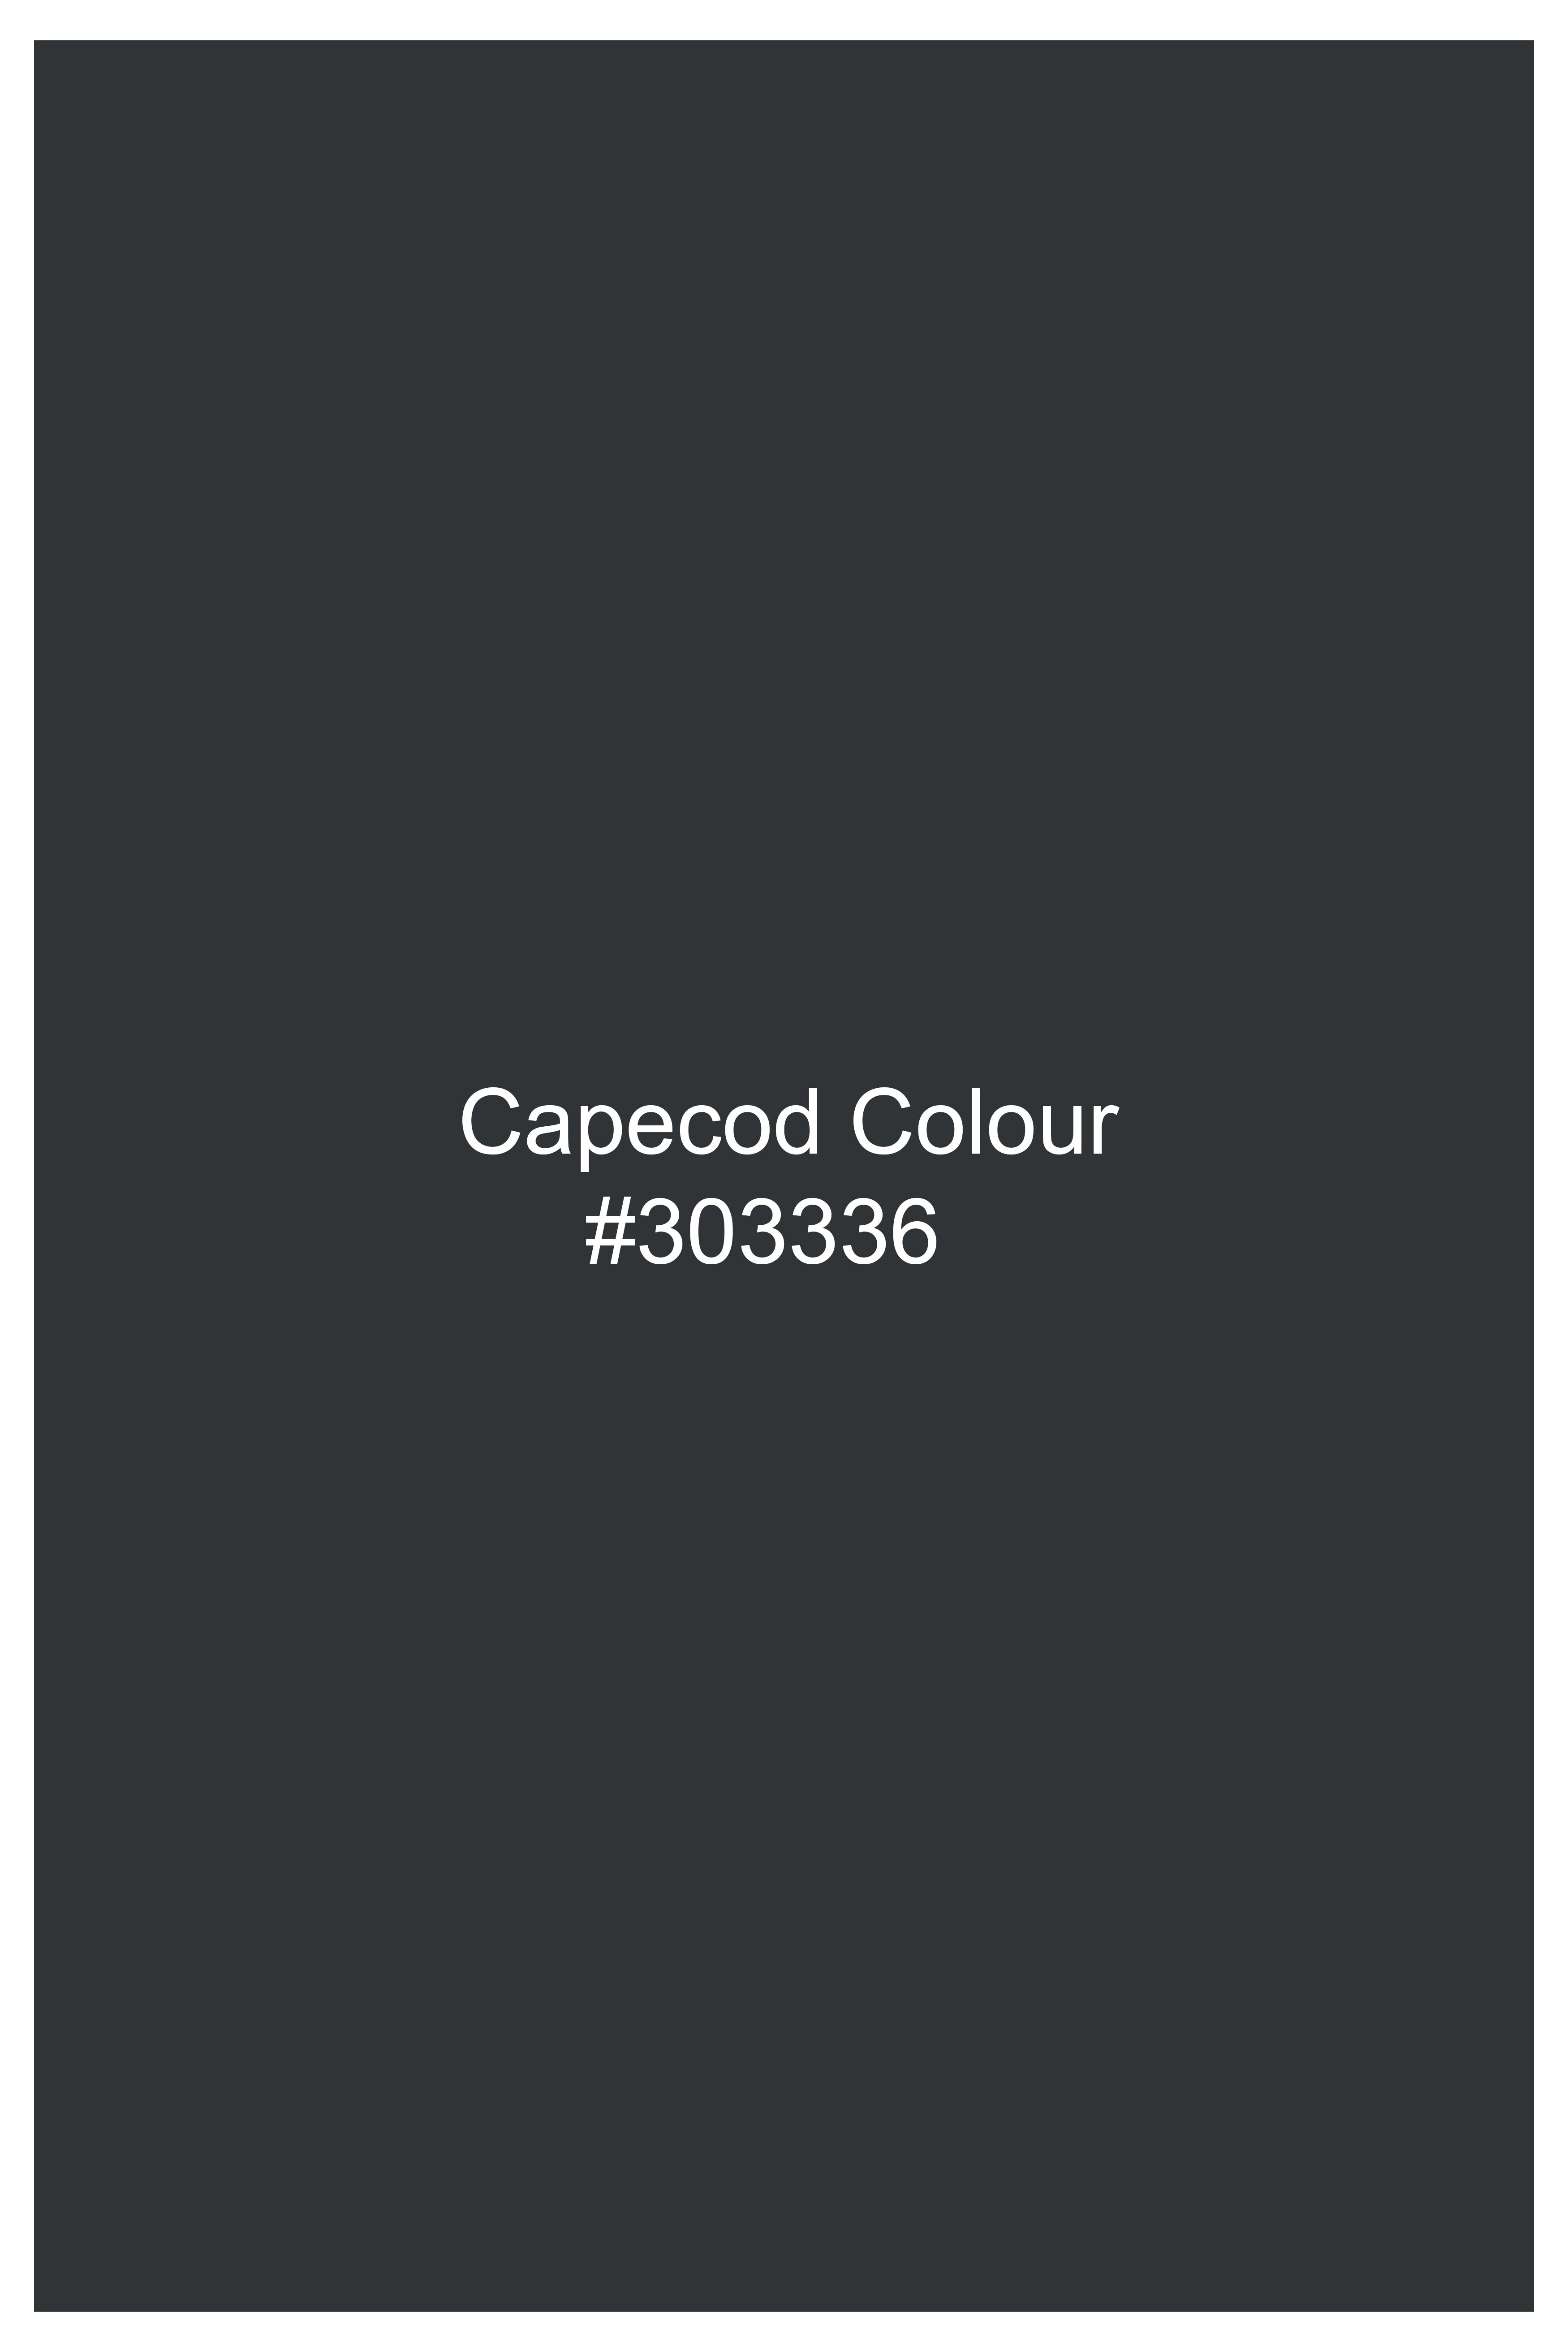 Capecod Gray Wool Rich Waistcoat V2912-36, V2912-38, V2912-40, V2912-42, V2912-44, V2912-46, V2912-48, V2912-50, V2912-12, V2912-54, V2912-56, V2912-58, V2912-60